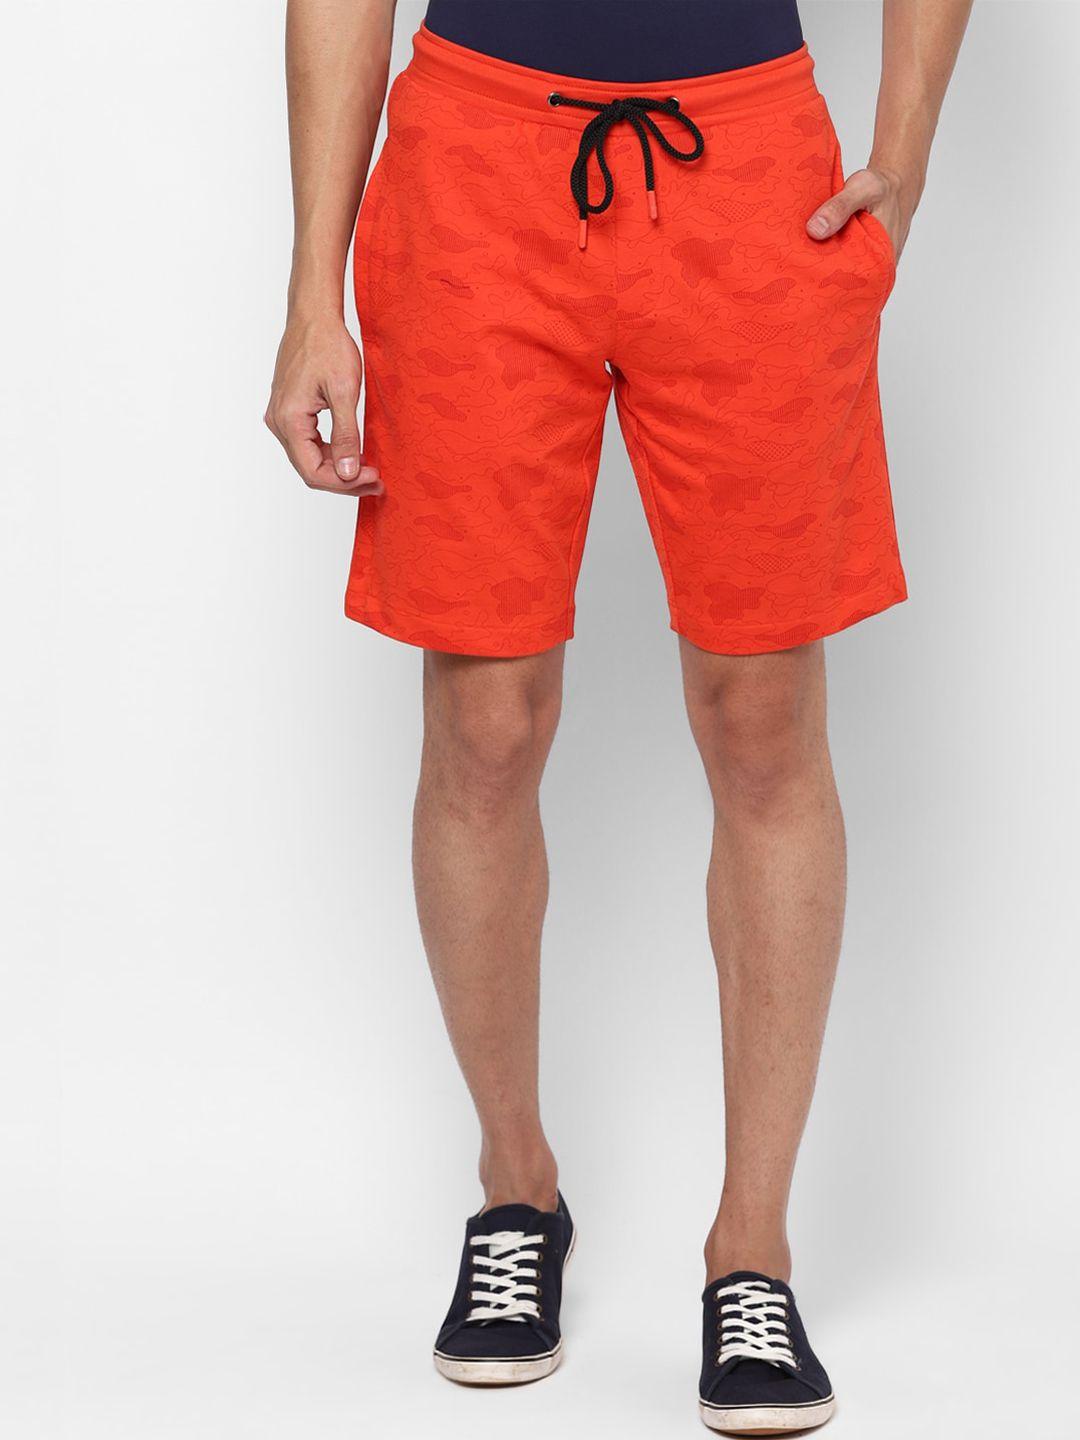 allen solly tribe men orange printed slim fit regular shorts